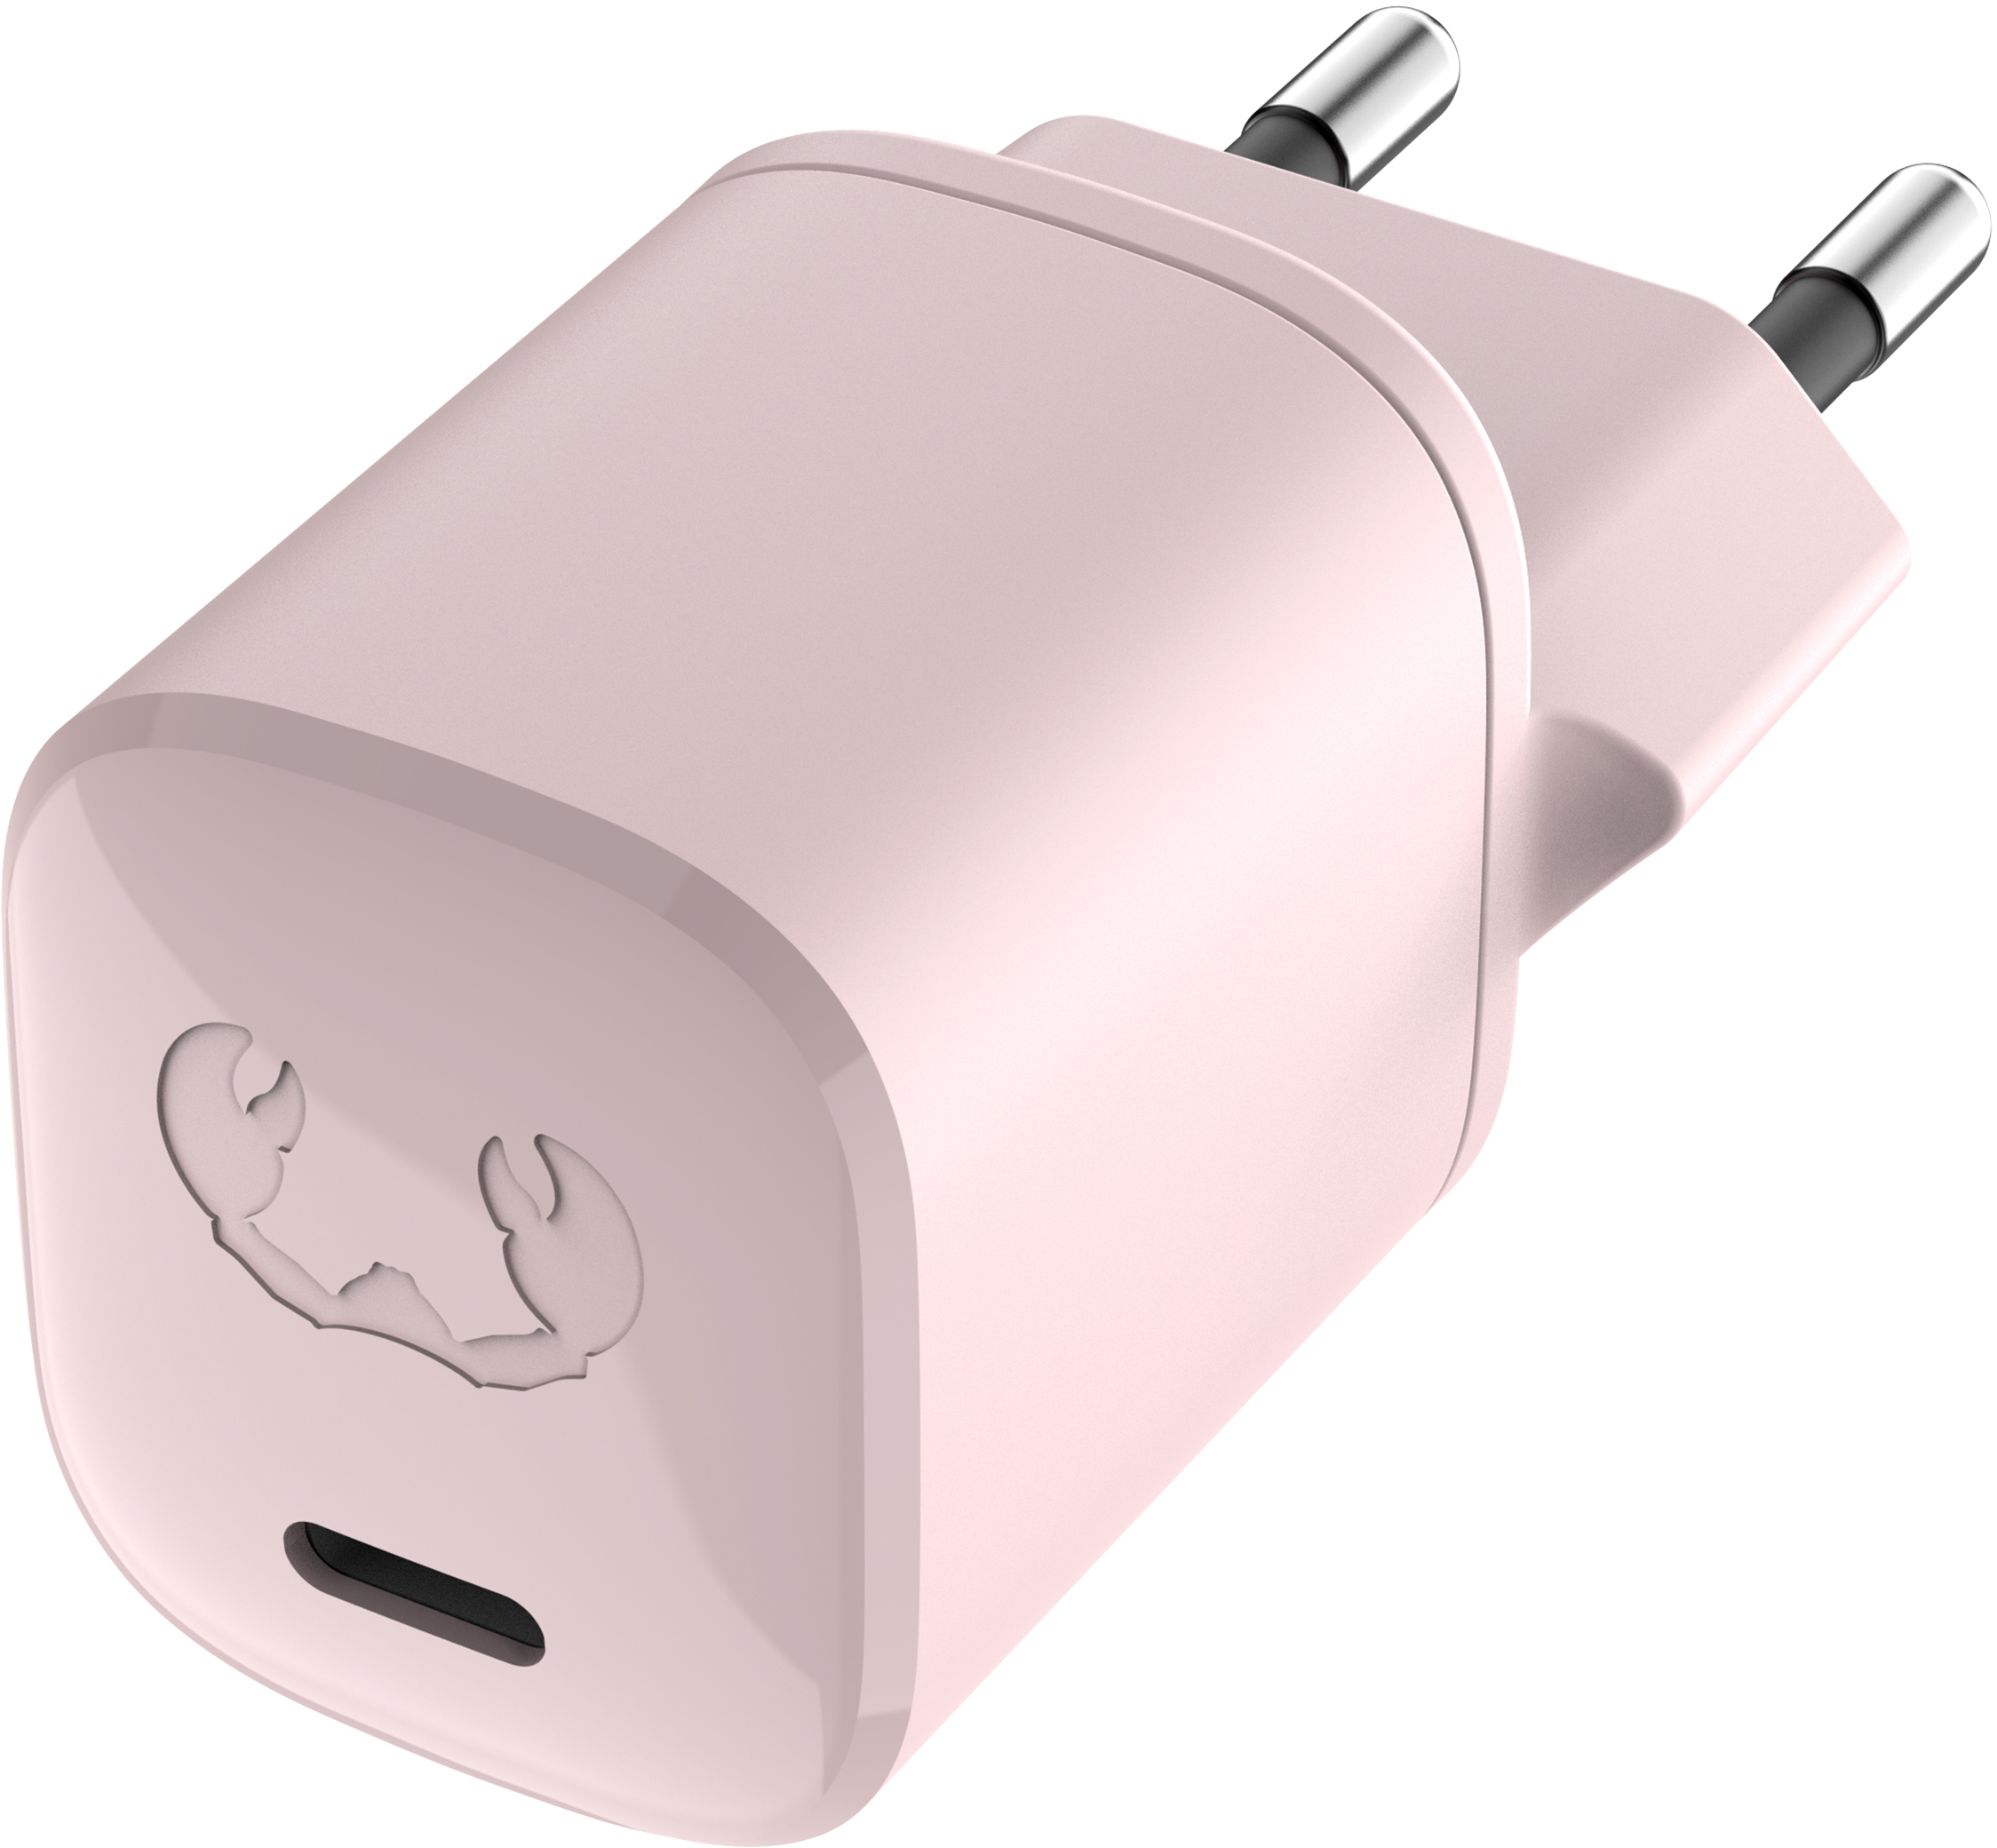 FRESH'N REBEL Mini Charger USB-C PD 2WC20SP Smokey Pink 20W